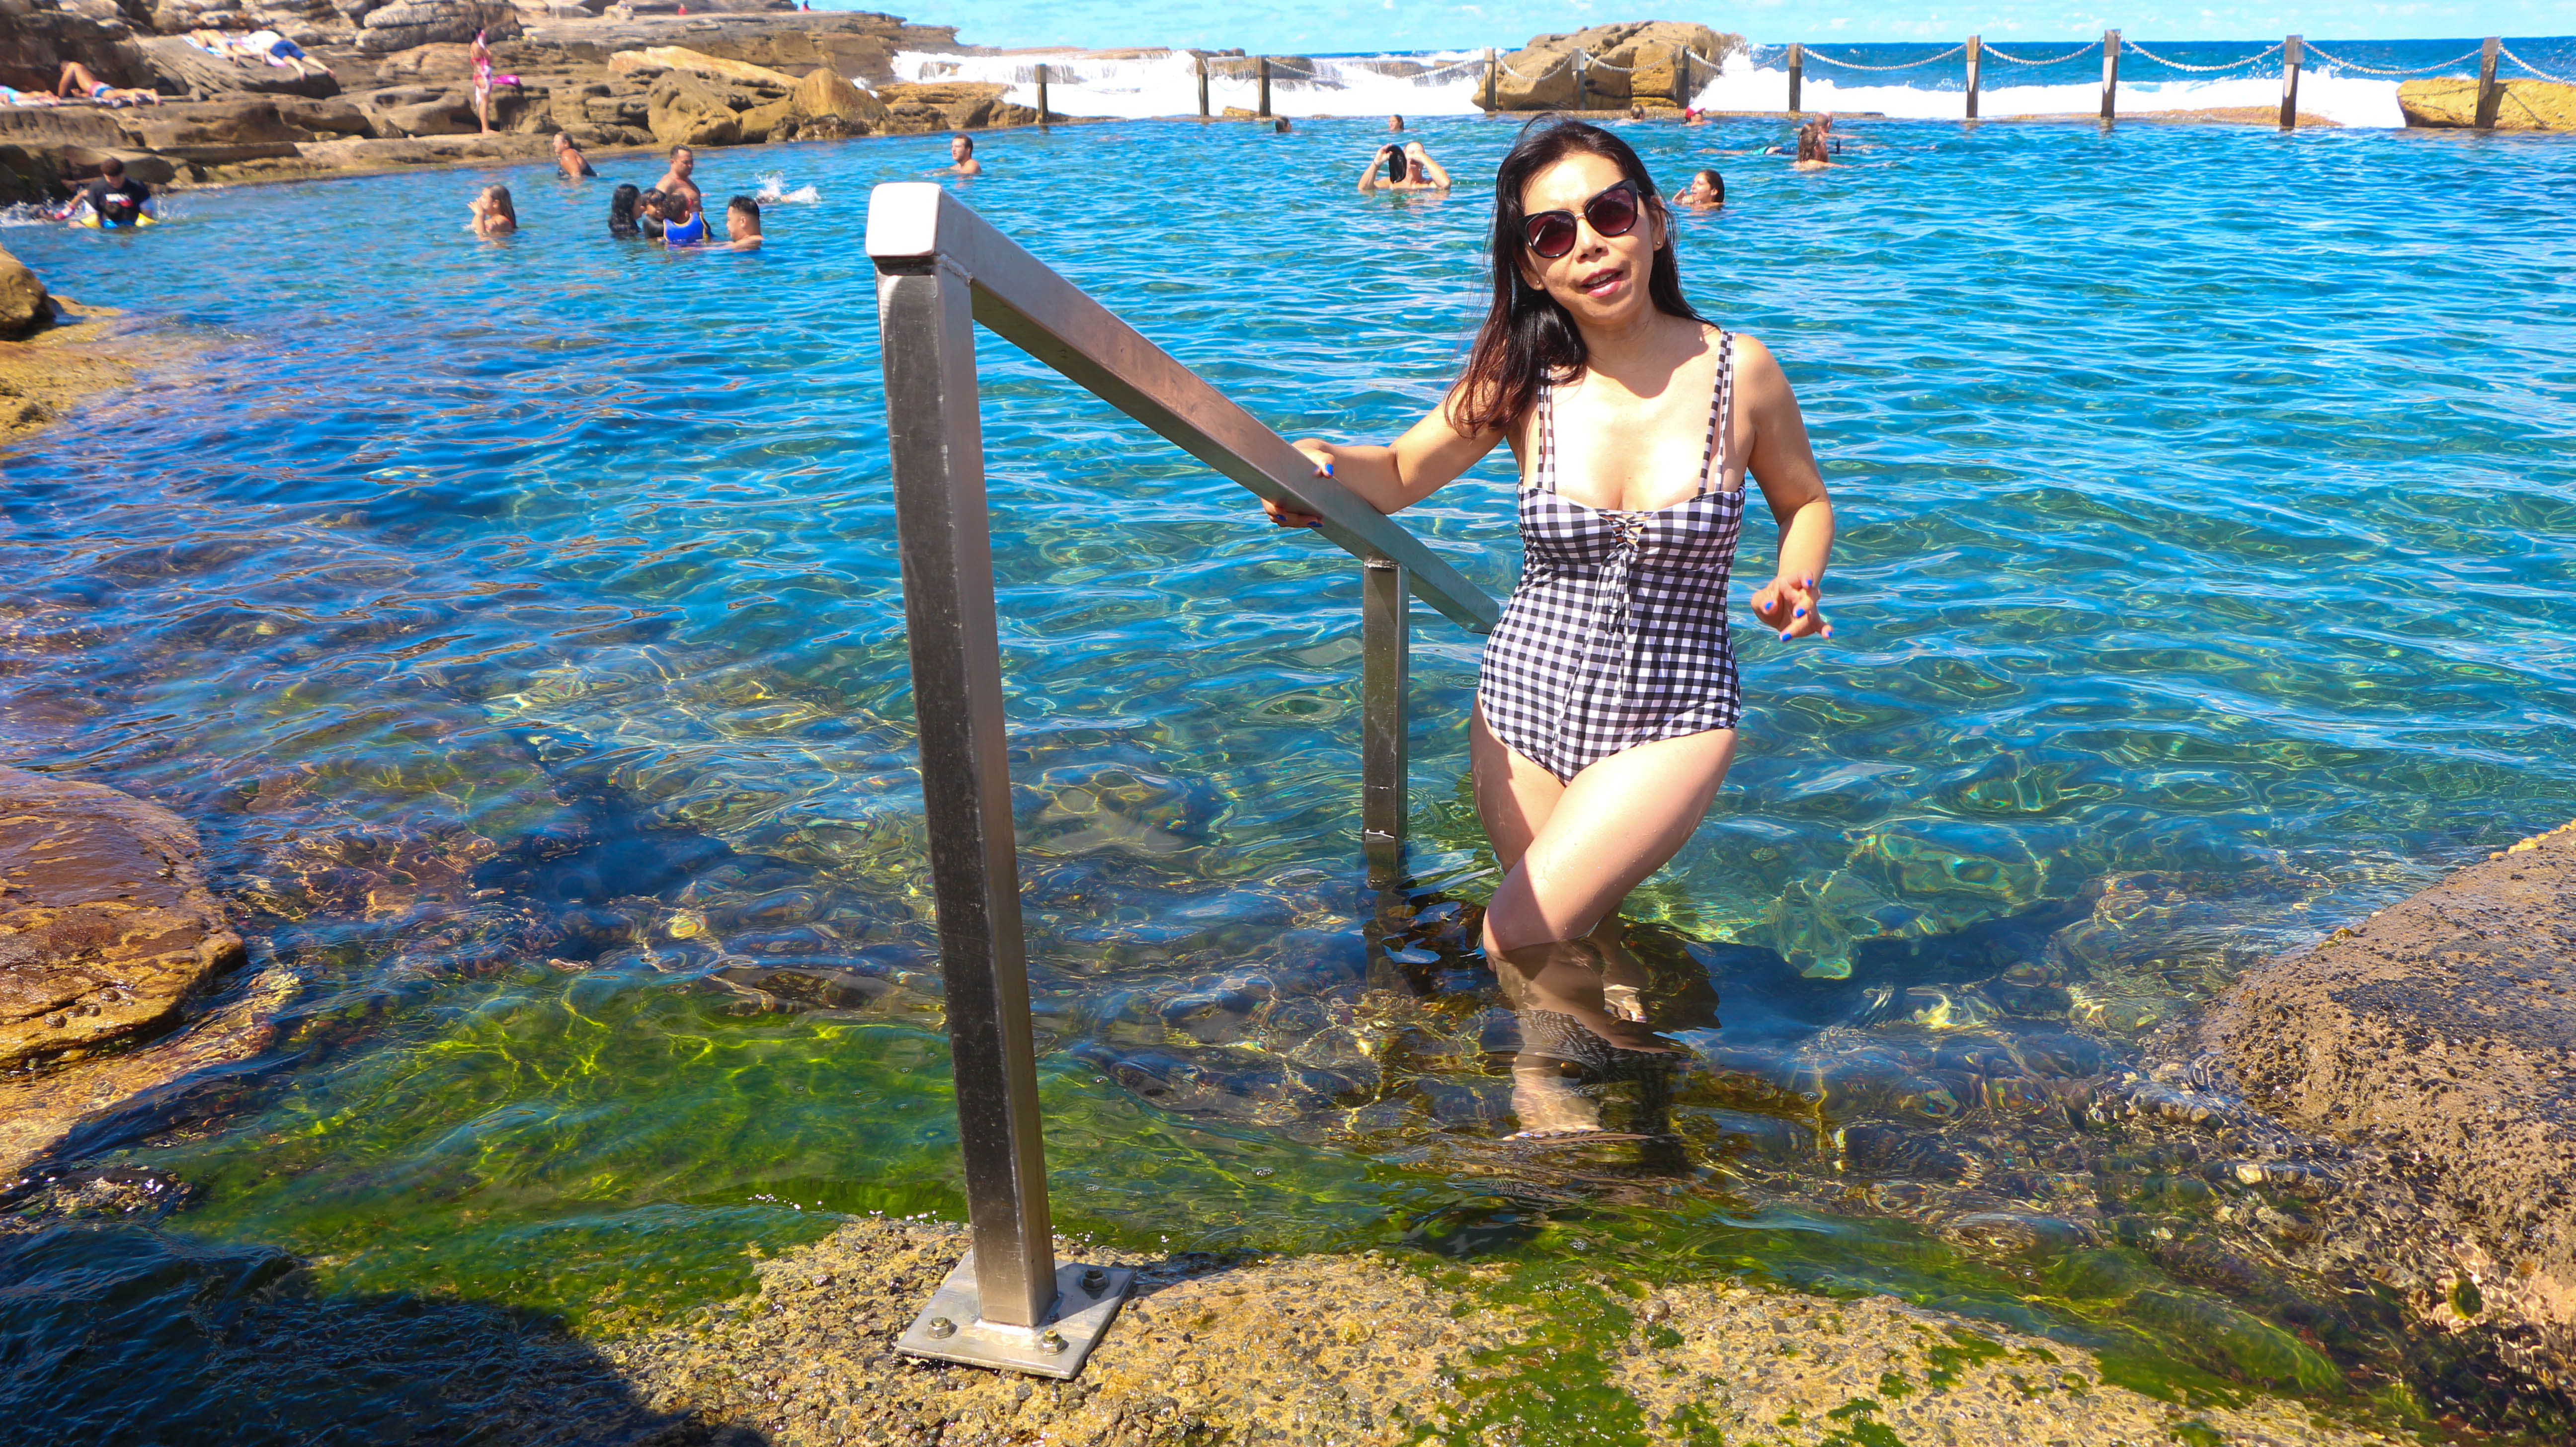 Sydney Rock Pool